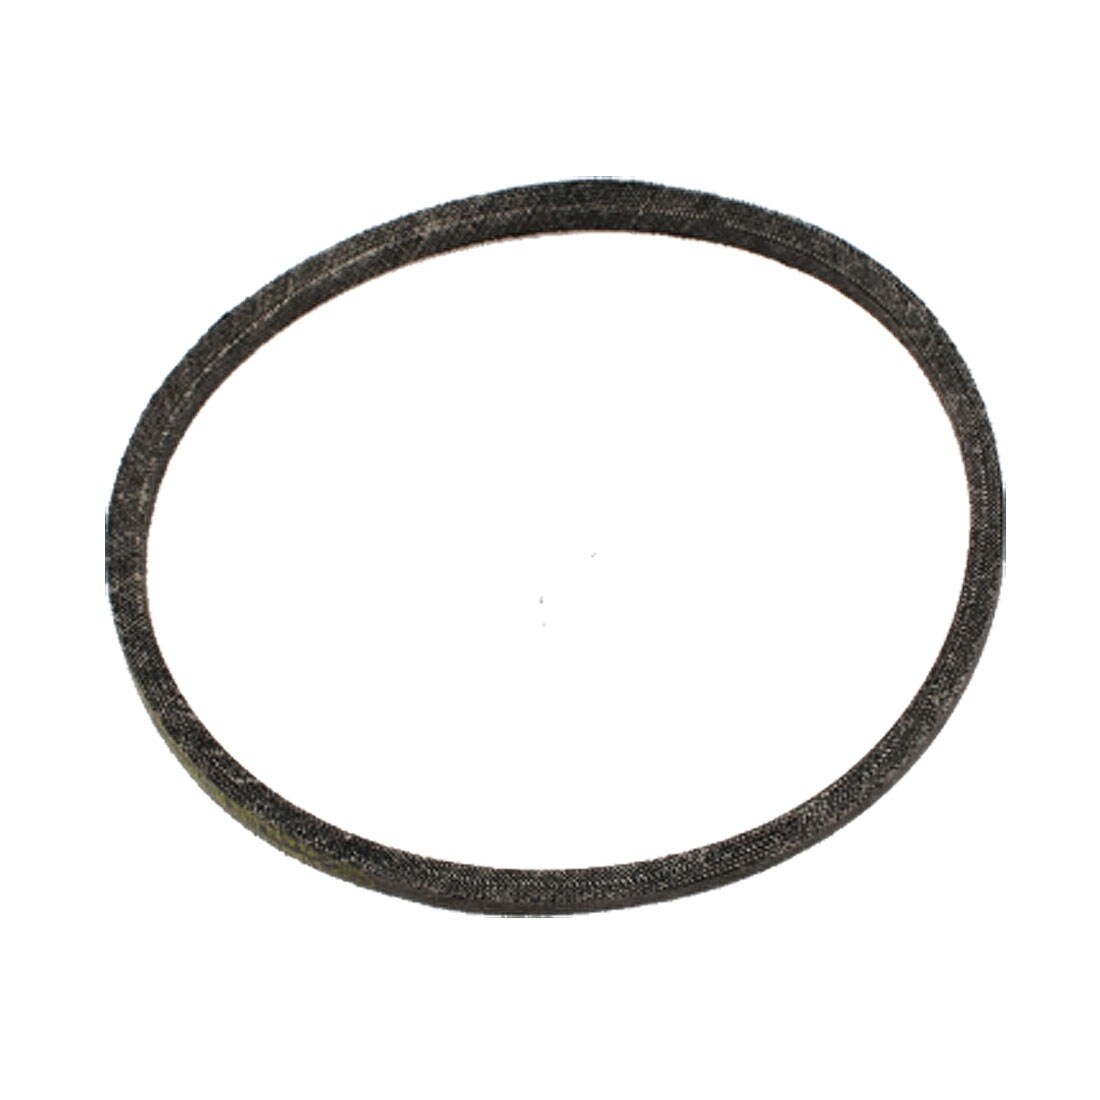 Washing Machine Washer 468mm 18 1/2" Inner Girth Rubber V Type Belt - Black